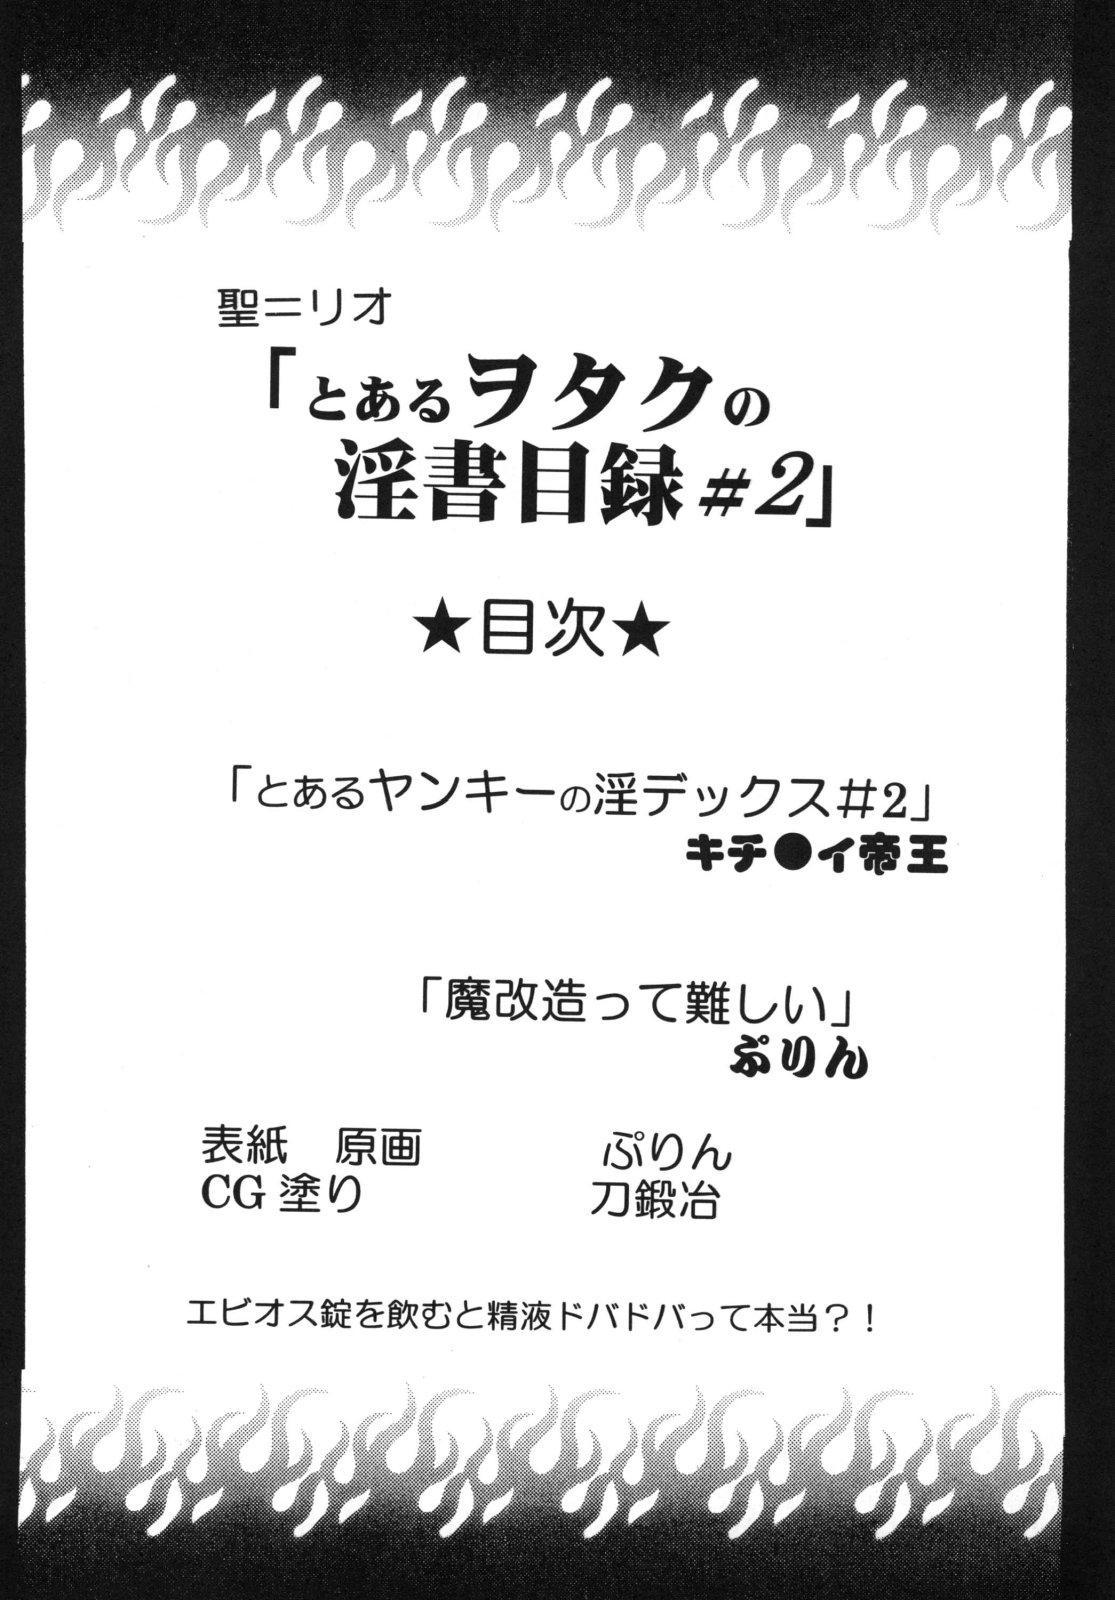 Sesso Toaru Otaku no Index #2 | 某魔术的淫蒂克丝，某不良少年的茵蒂克丝#2 - Toaru majutsu no index | a certain magical index Cock Sucking - Page 3